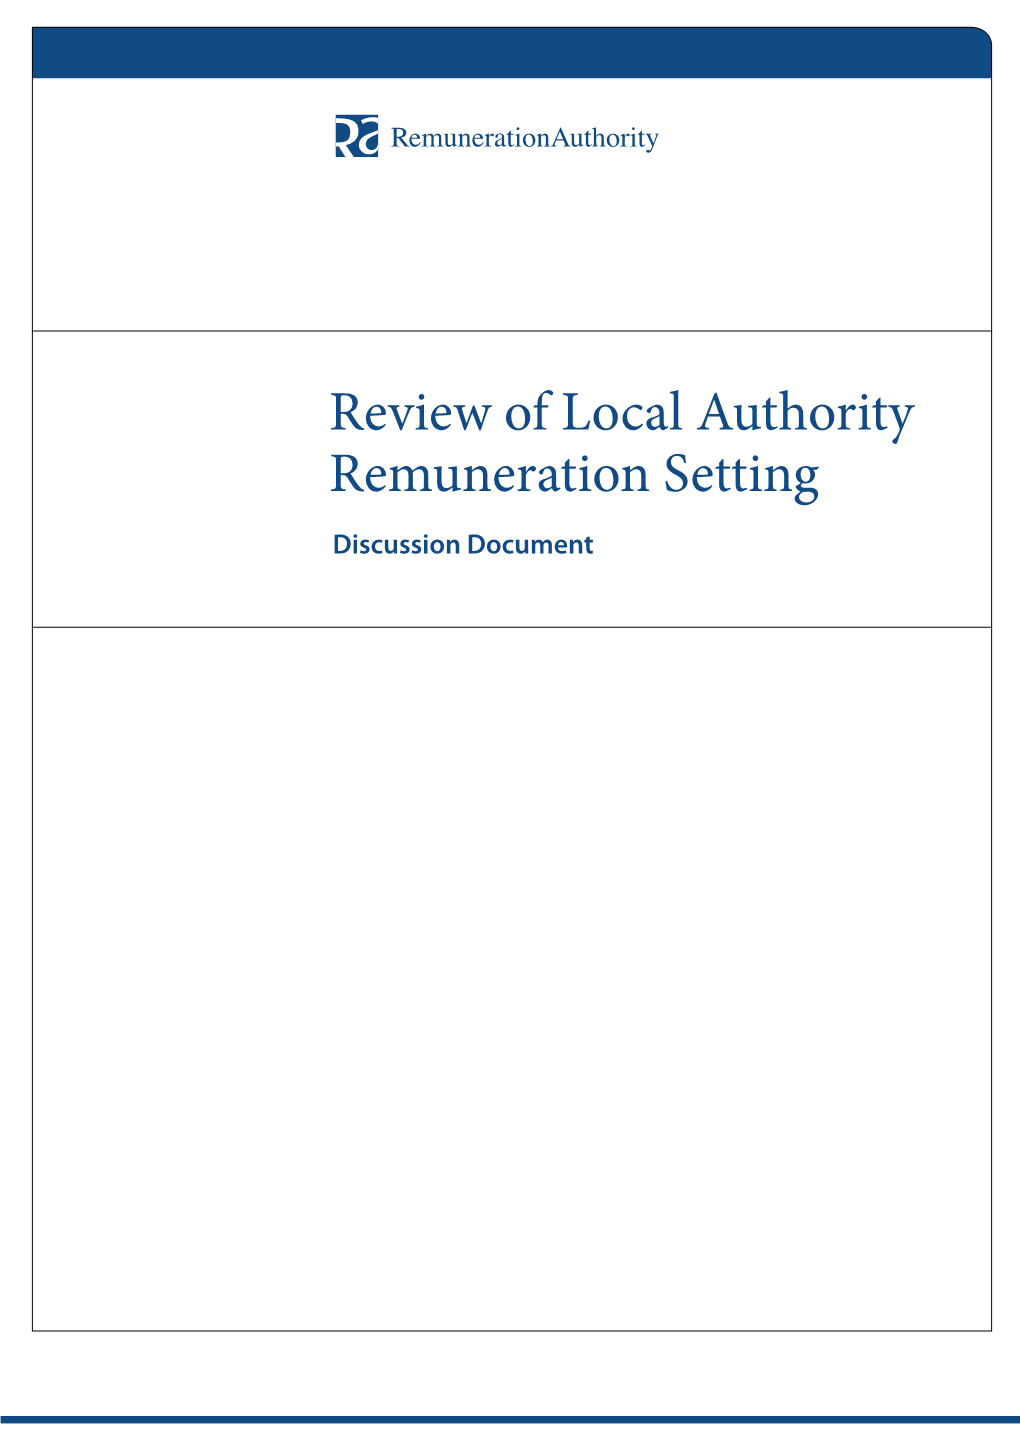 Remuneration Authority Discussion Document